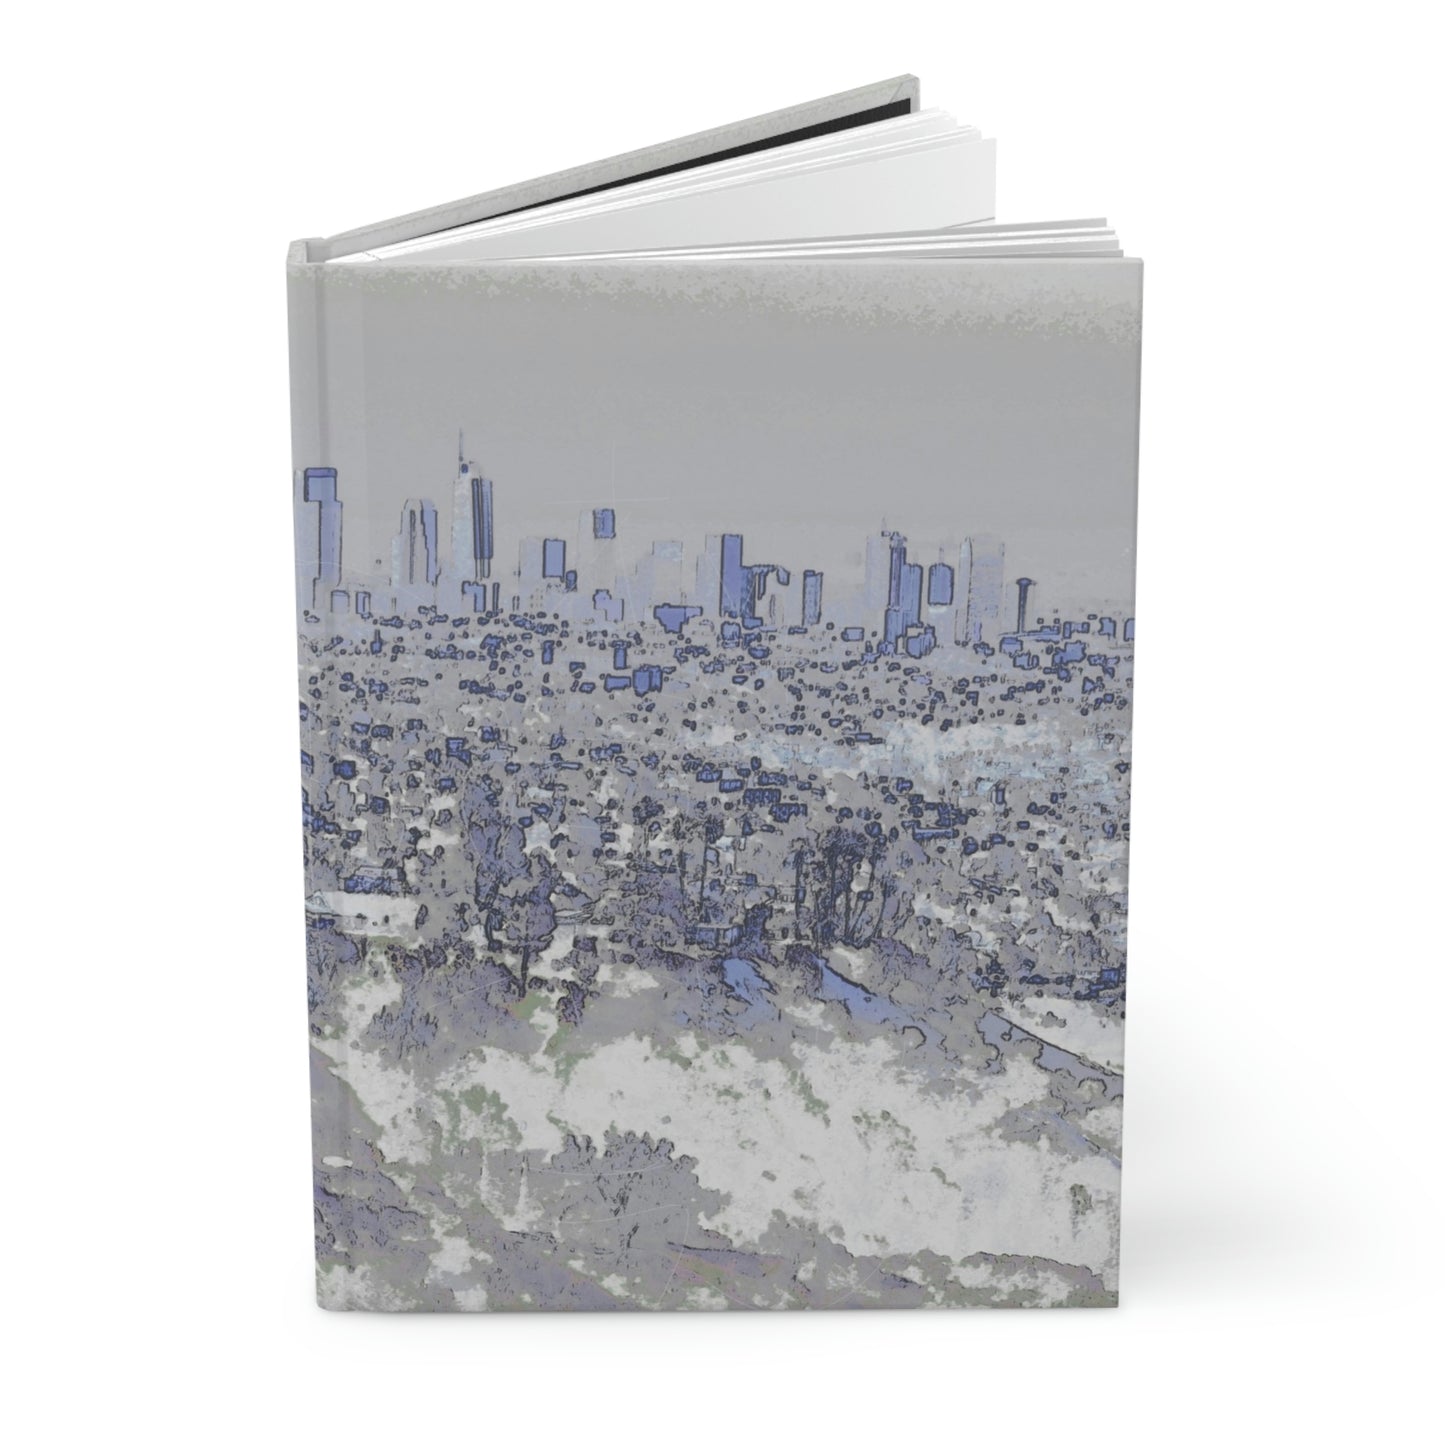 Indigo and gray abstract retro cityscape hardcover journal - matte finish